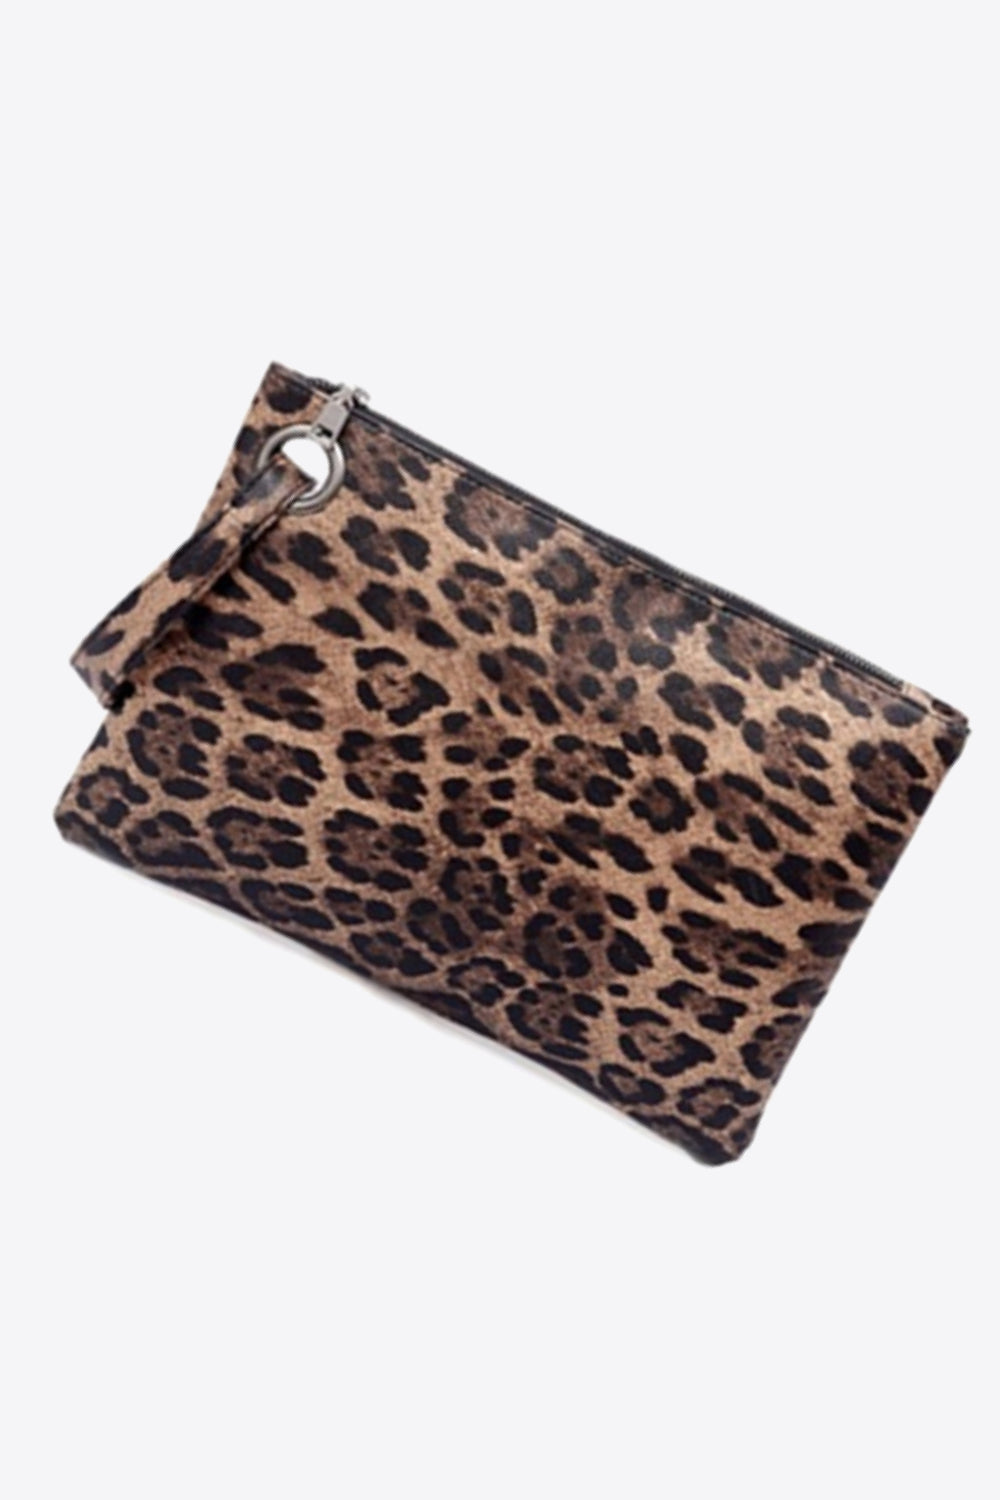 Leopard PU Leather Clutch - nailedmoms